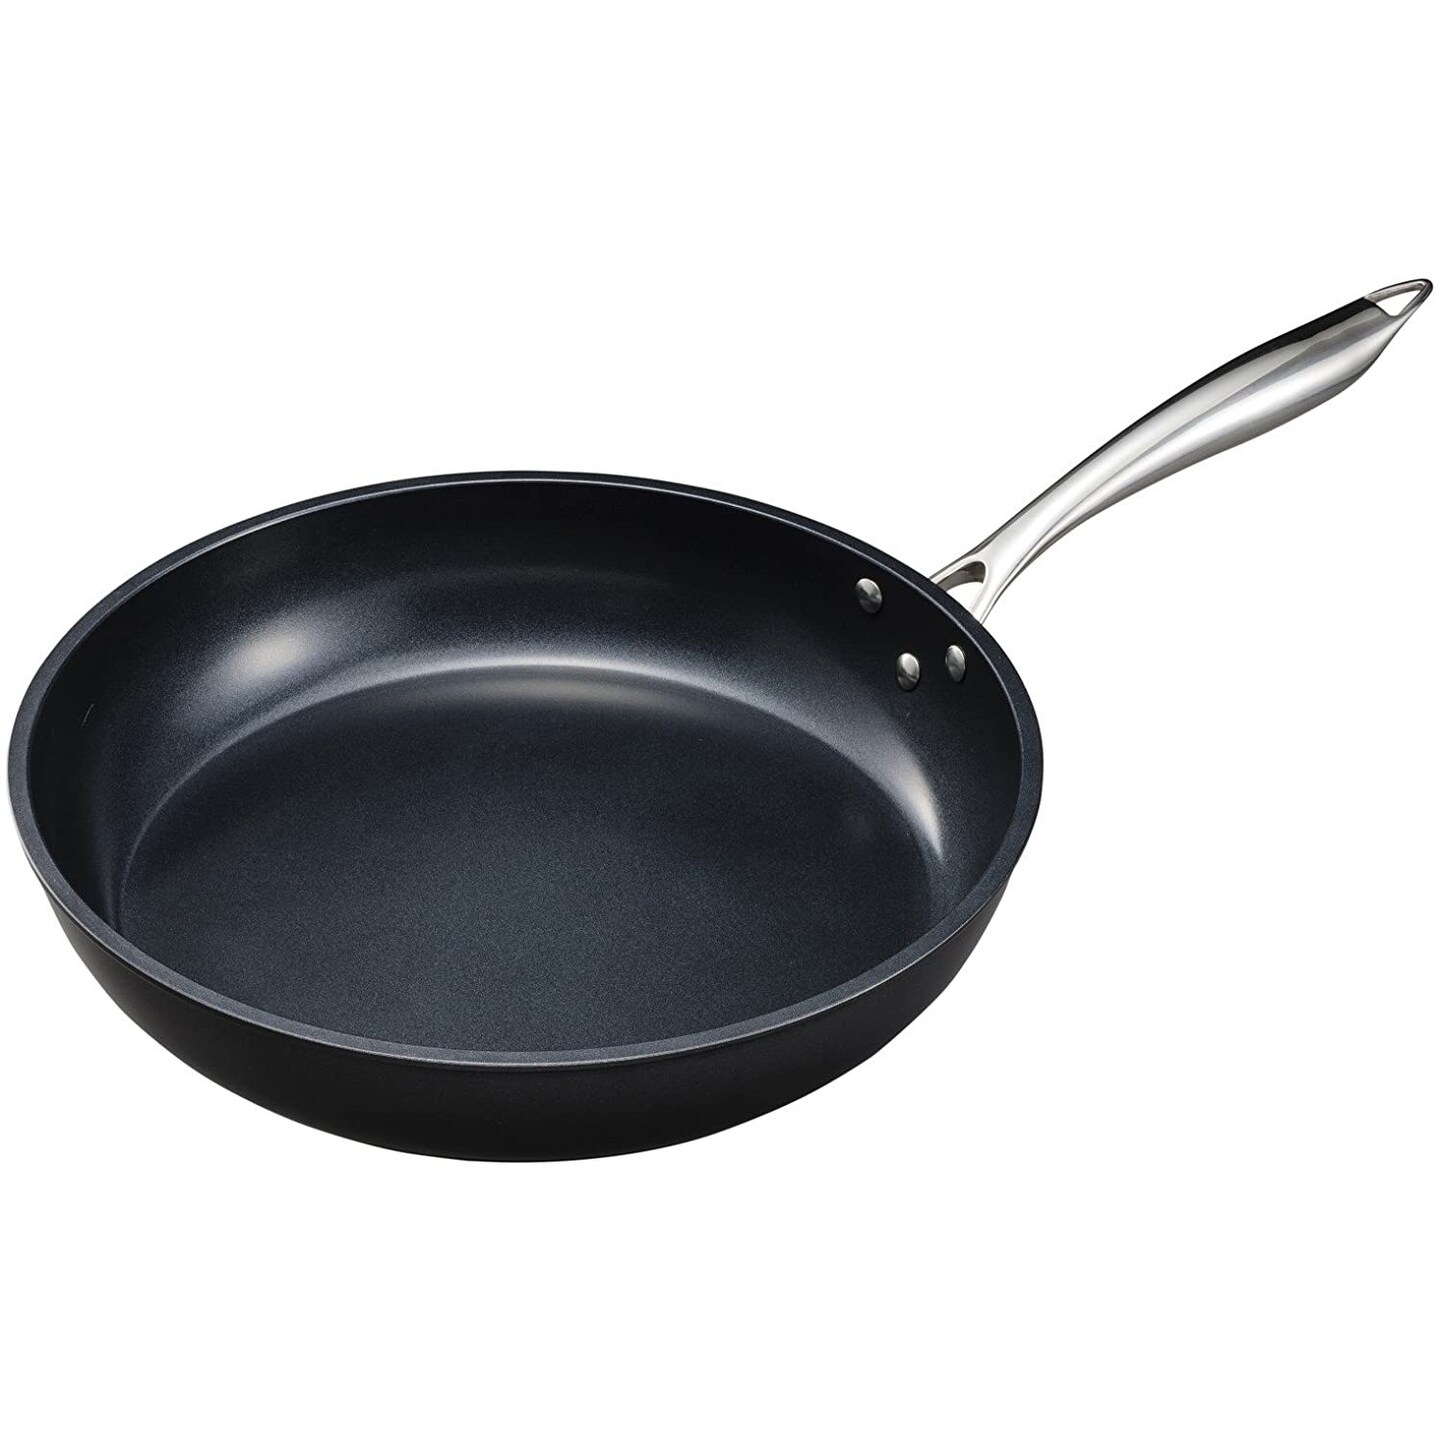 Kyocera 10 Fry Pan, 10 inch, Black Aluminum Ceramic Coated